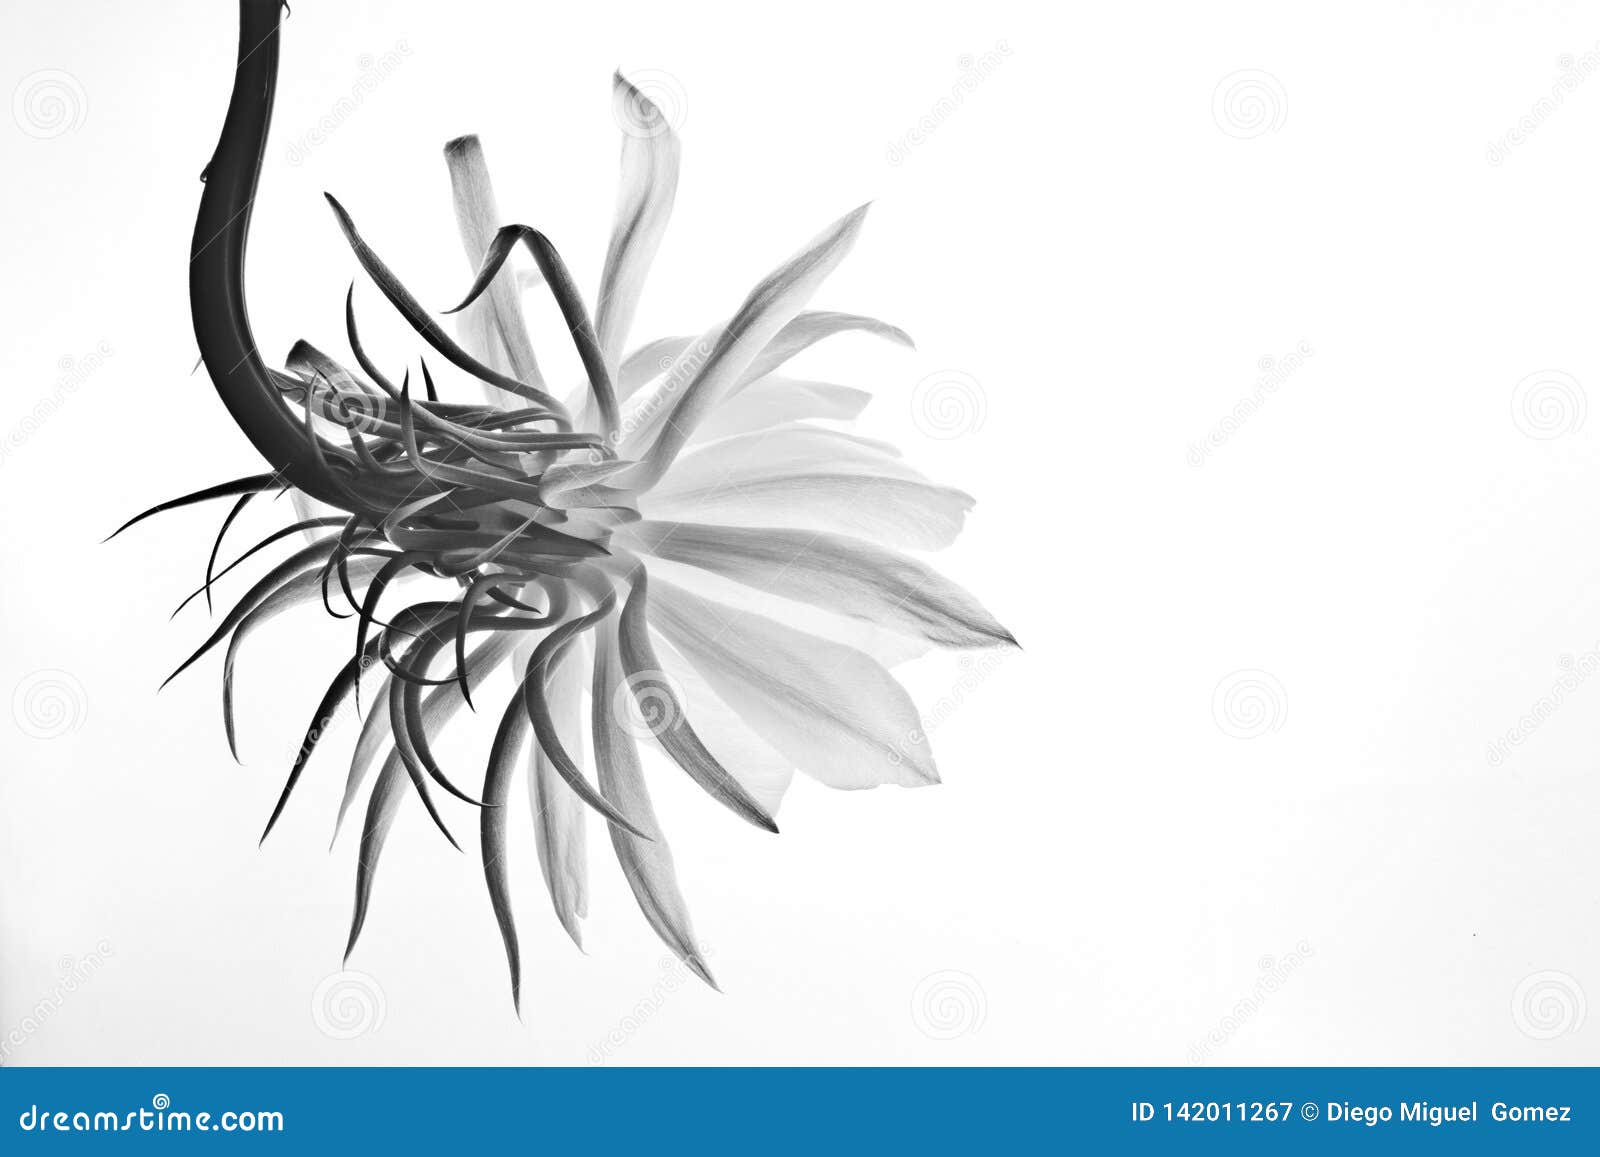  flower of epiphyllum oxipetalum or dama de noche